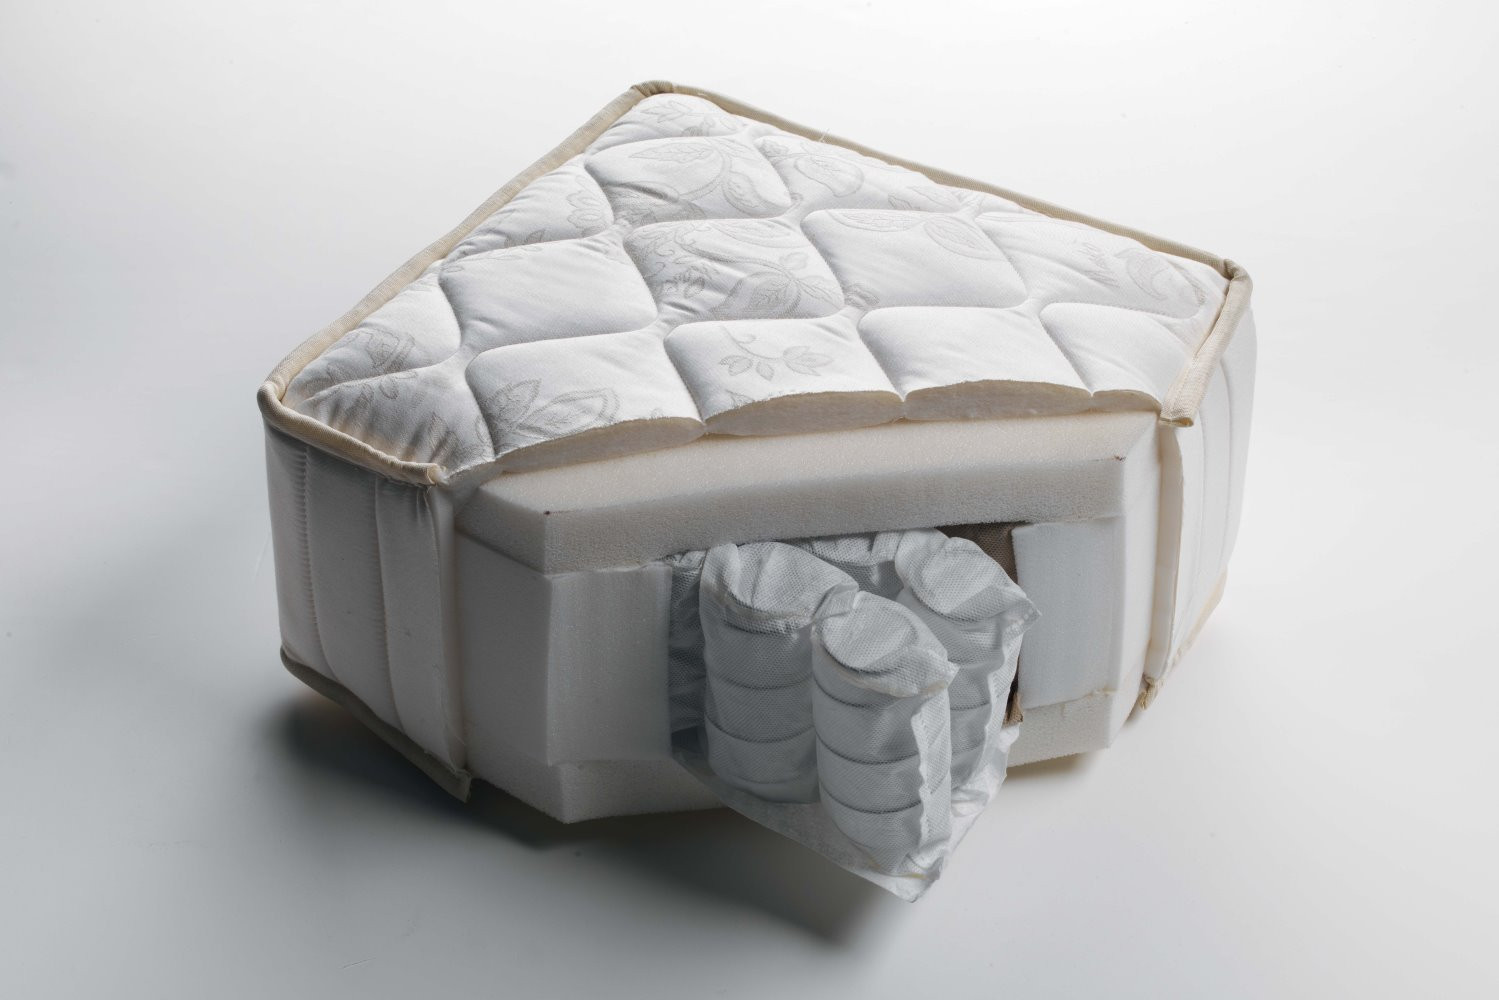 pocket spring mattress durability